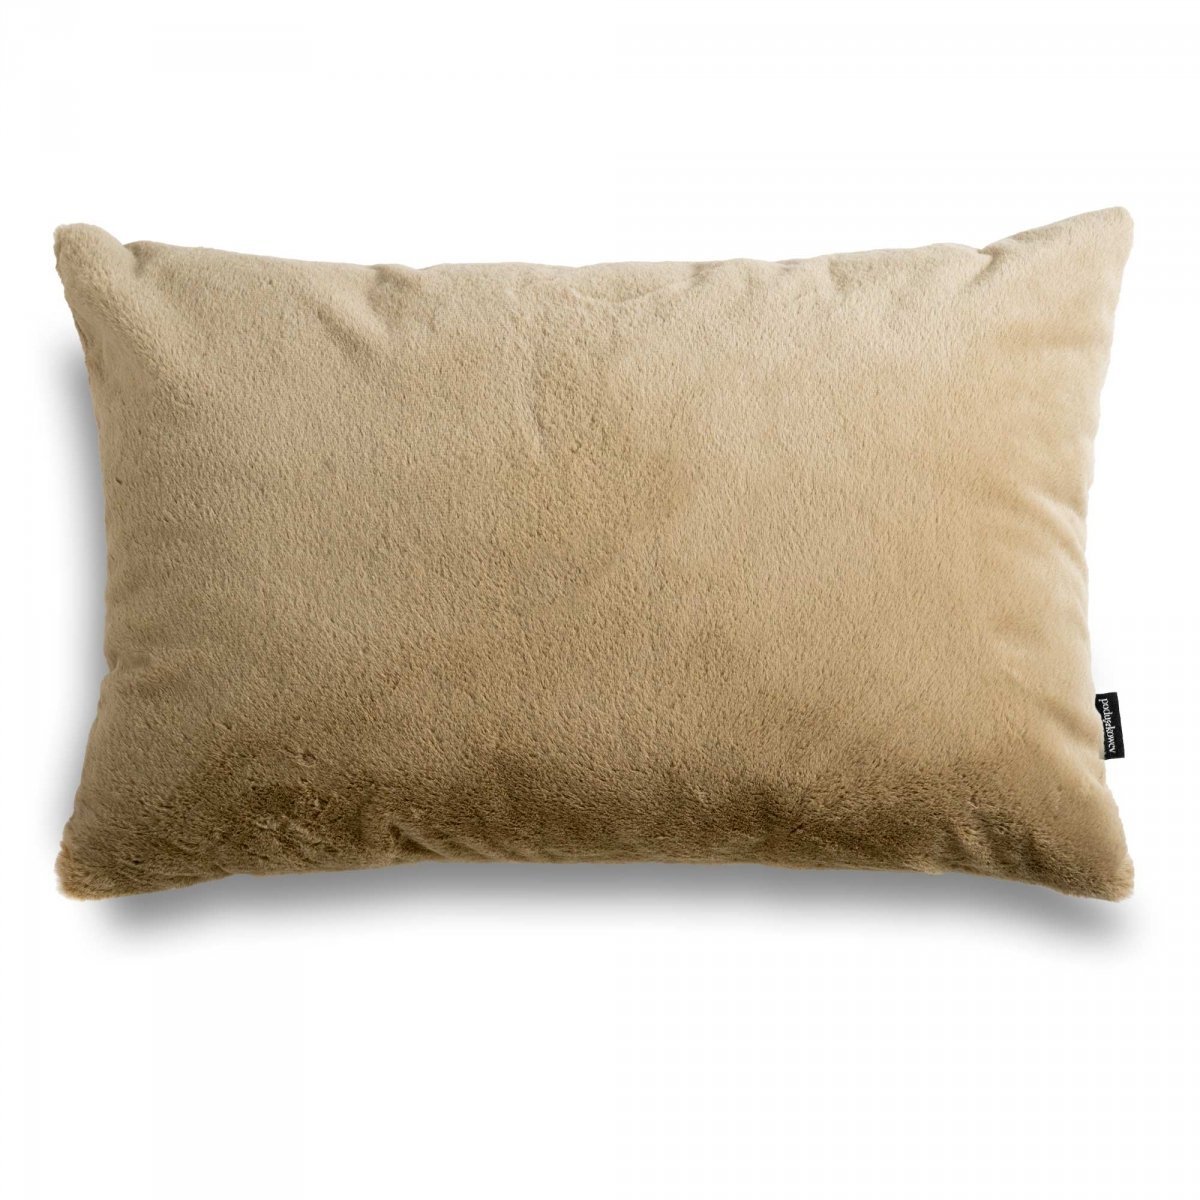 Foxy beige LARGE decorative pillow 70x50